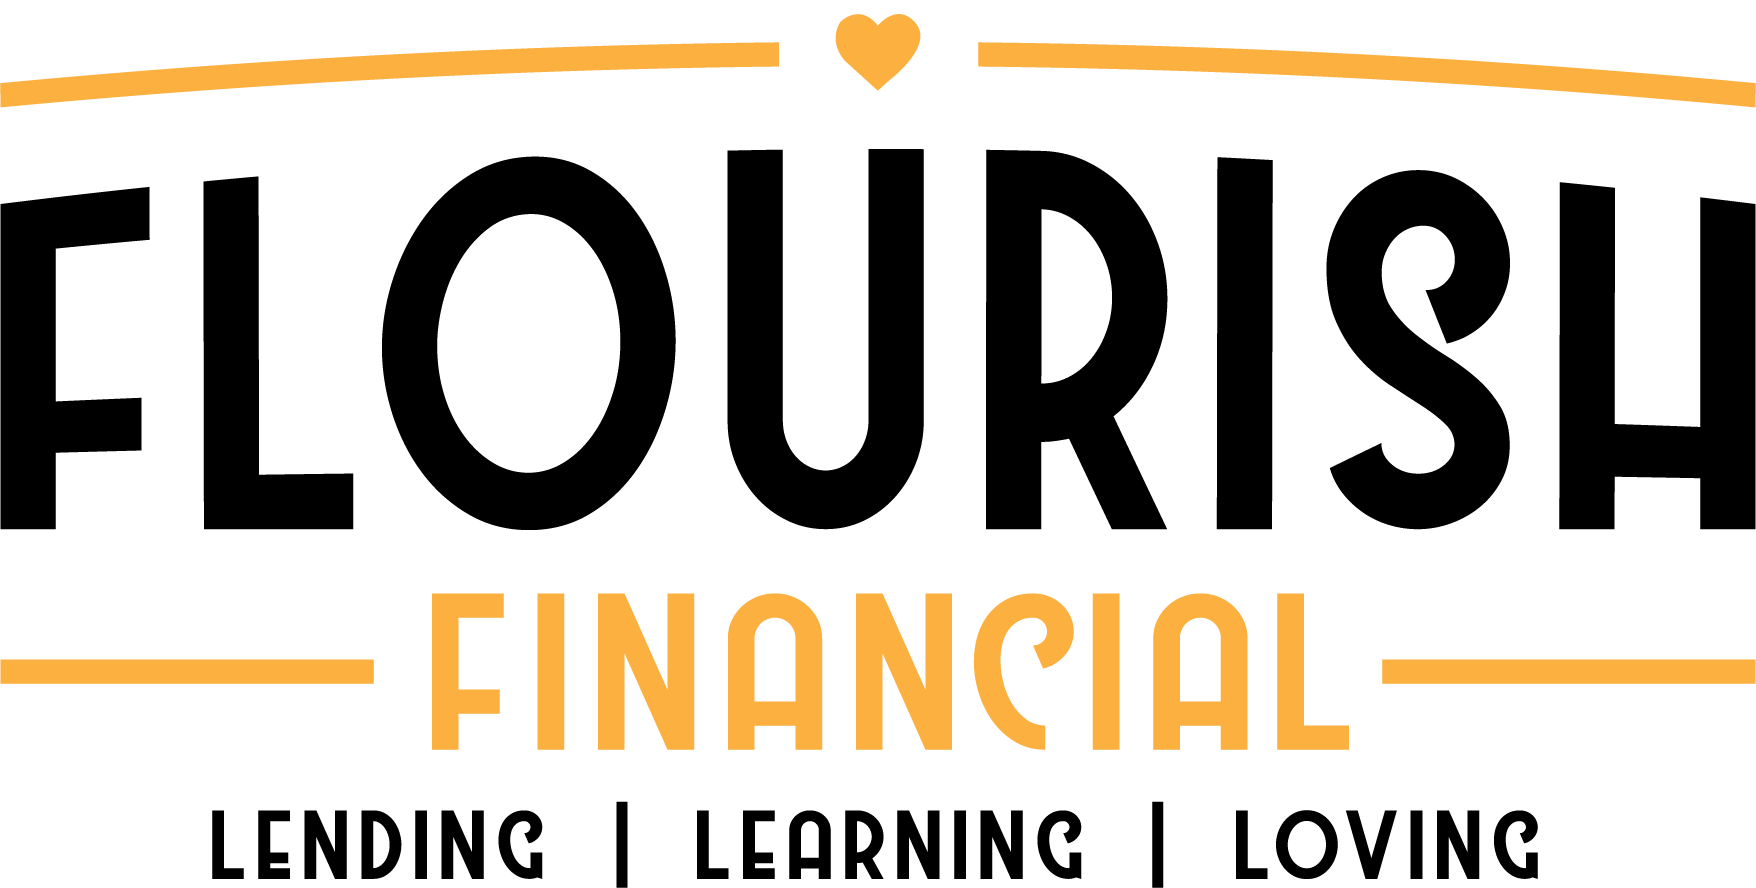 Flourish financial - lending, learning, loving transparent logo